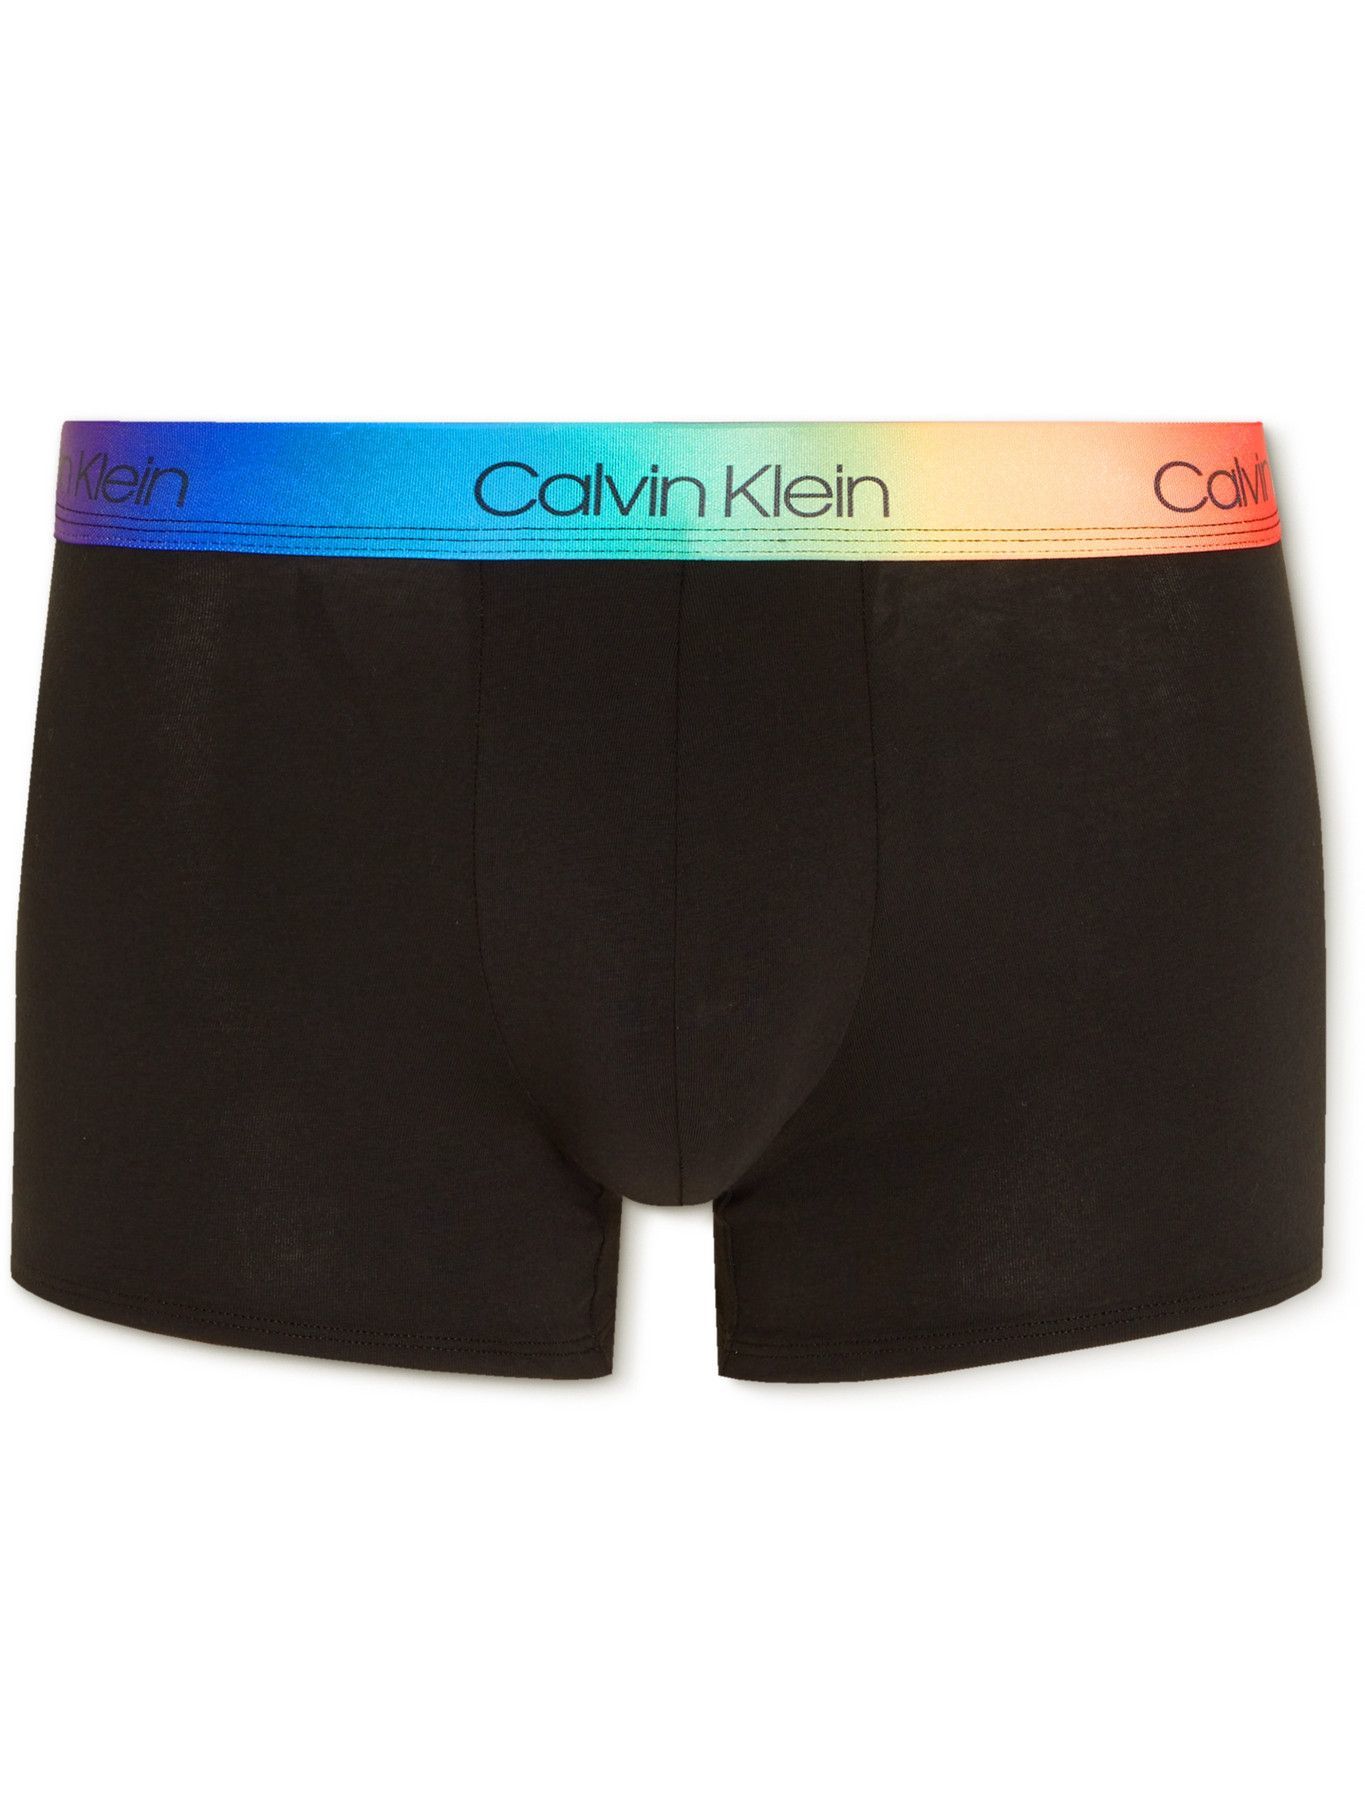 Calvin Klein Mens Black The Pride Edit Sport Brief 37332 Size XL